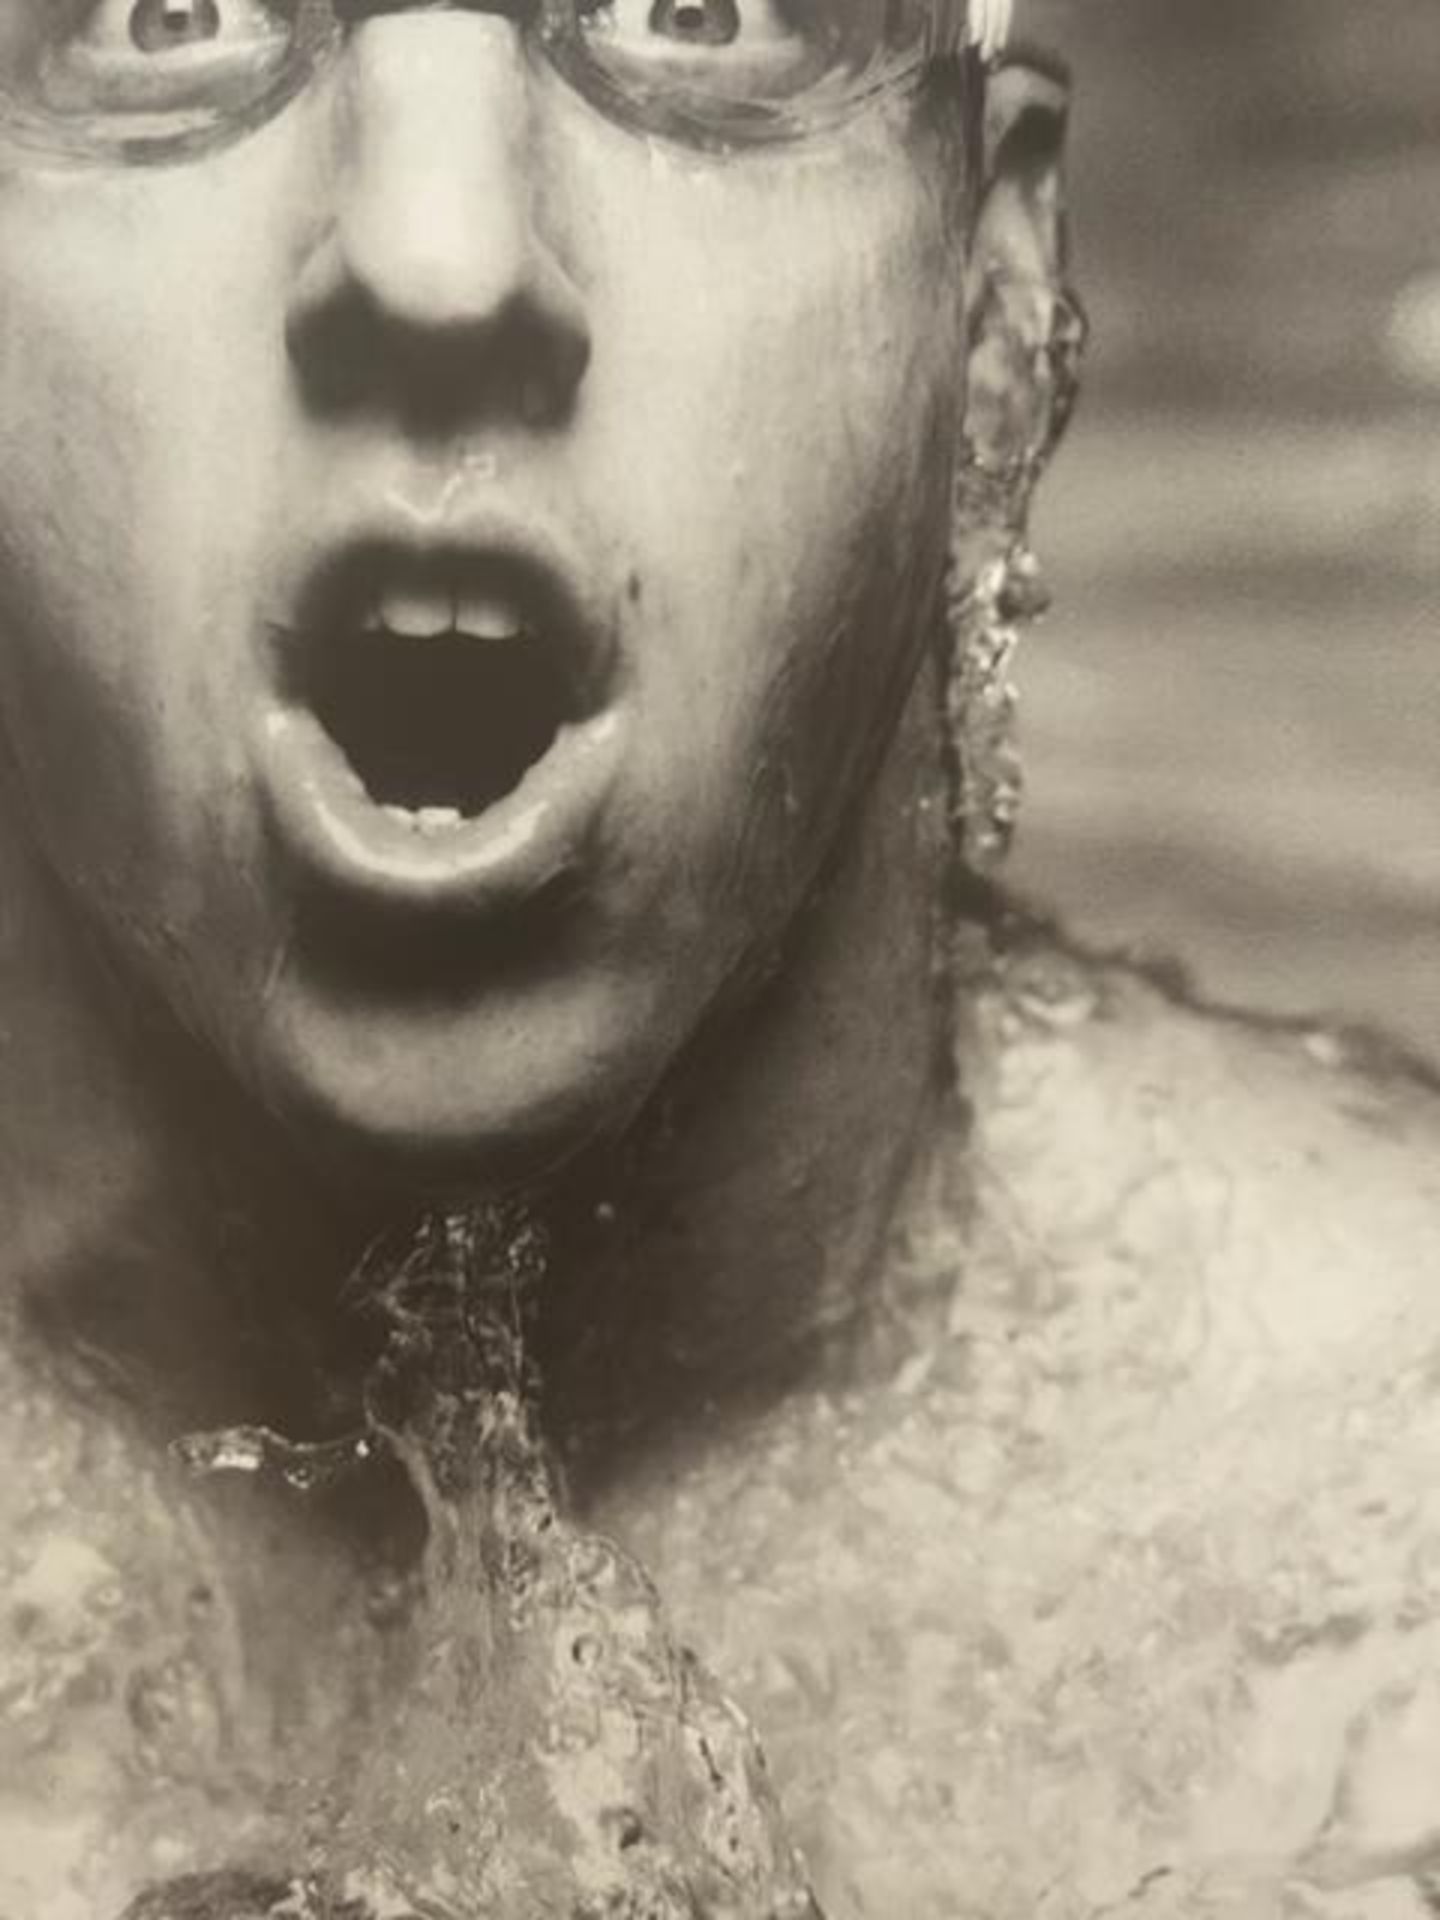 Annie Leibovitz "Untitled" Print. - Image 9 of 10